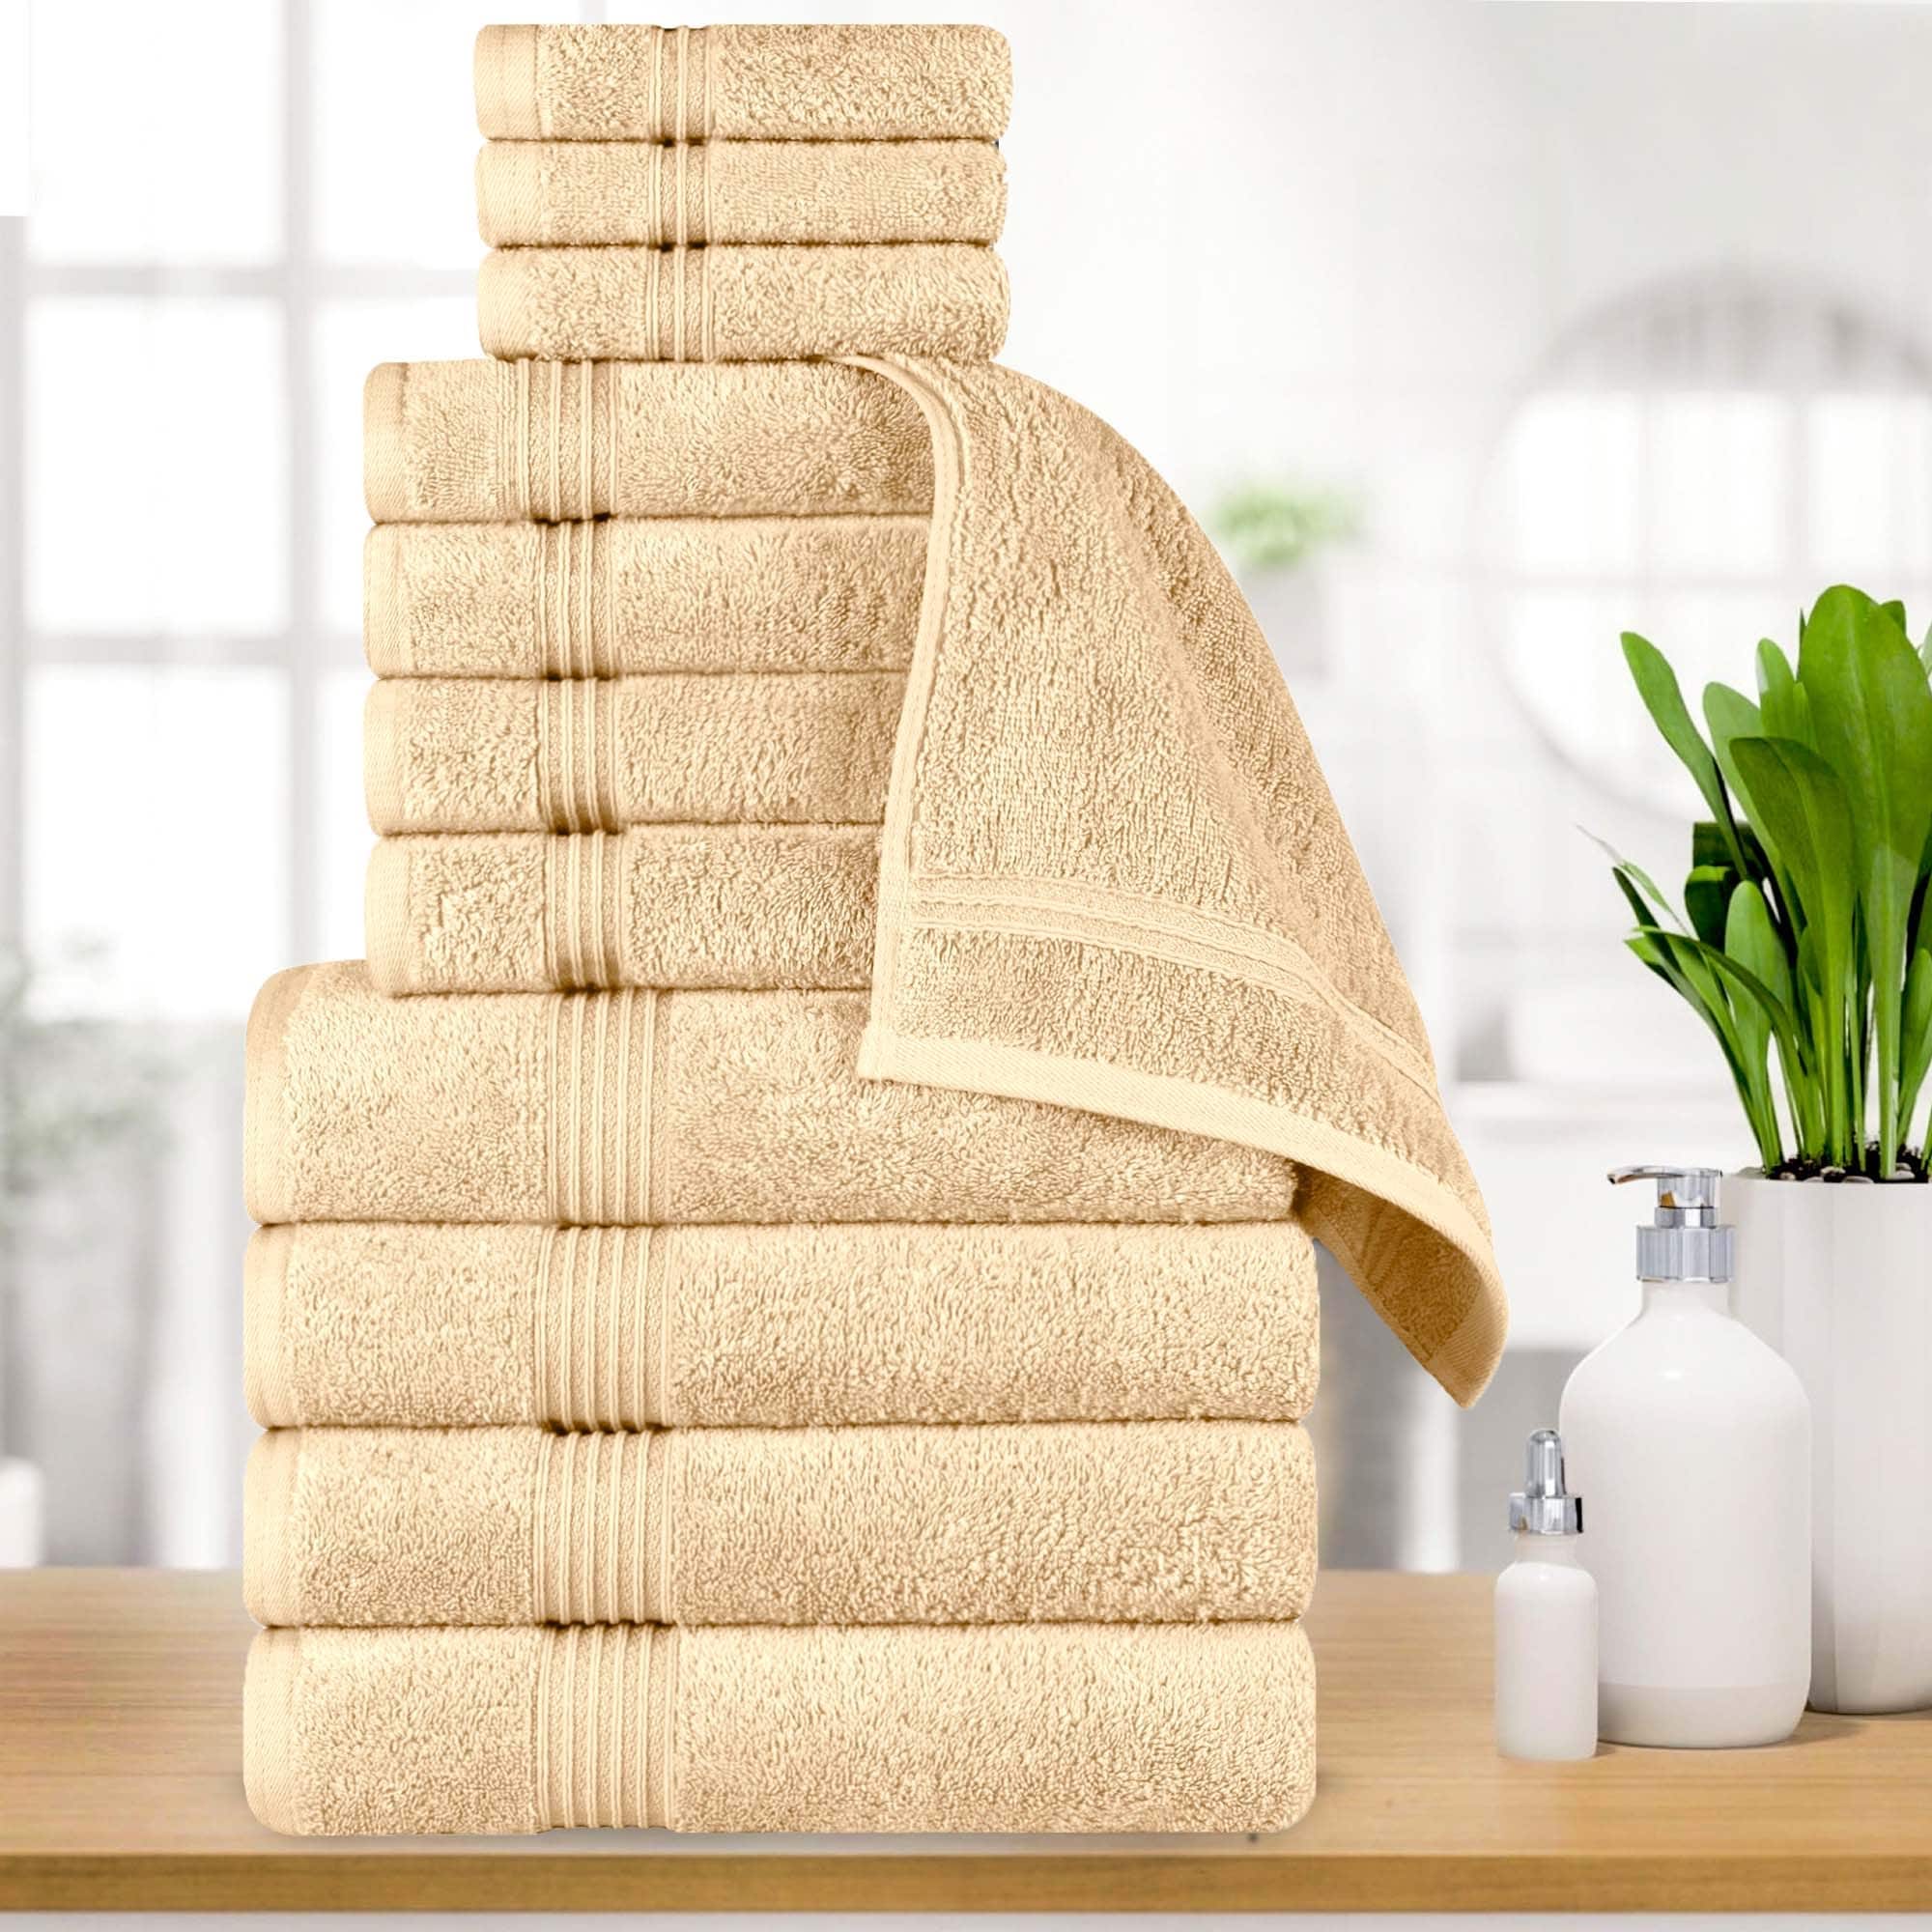 Bath Towels - Bed Bath & Beyond